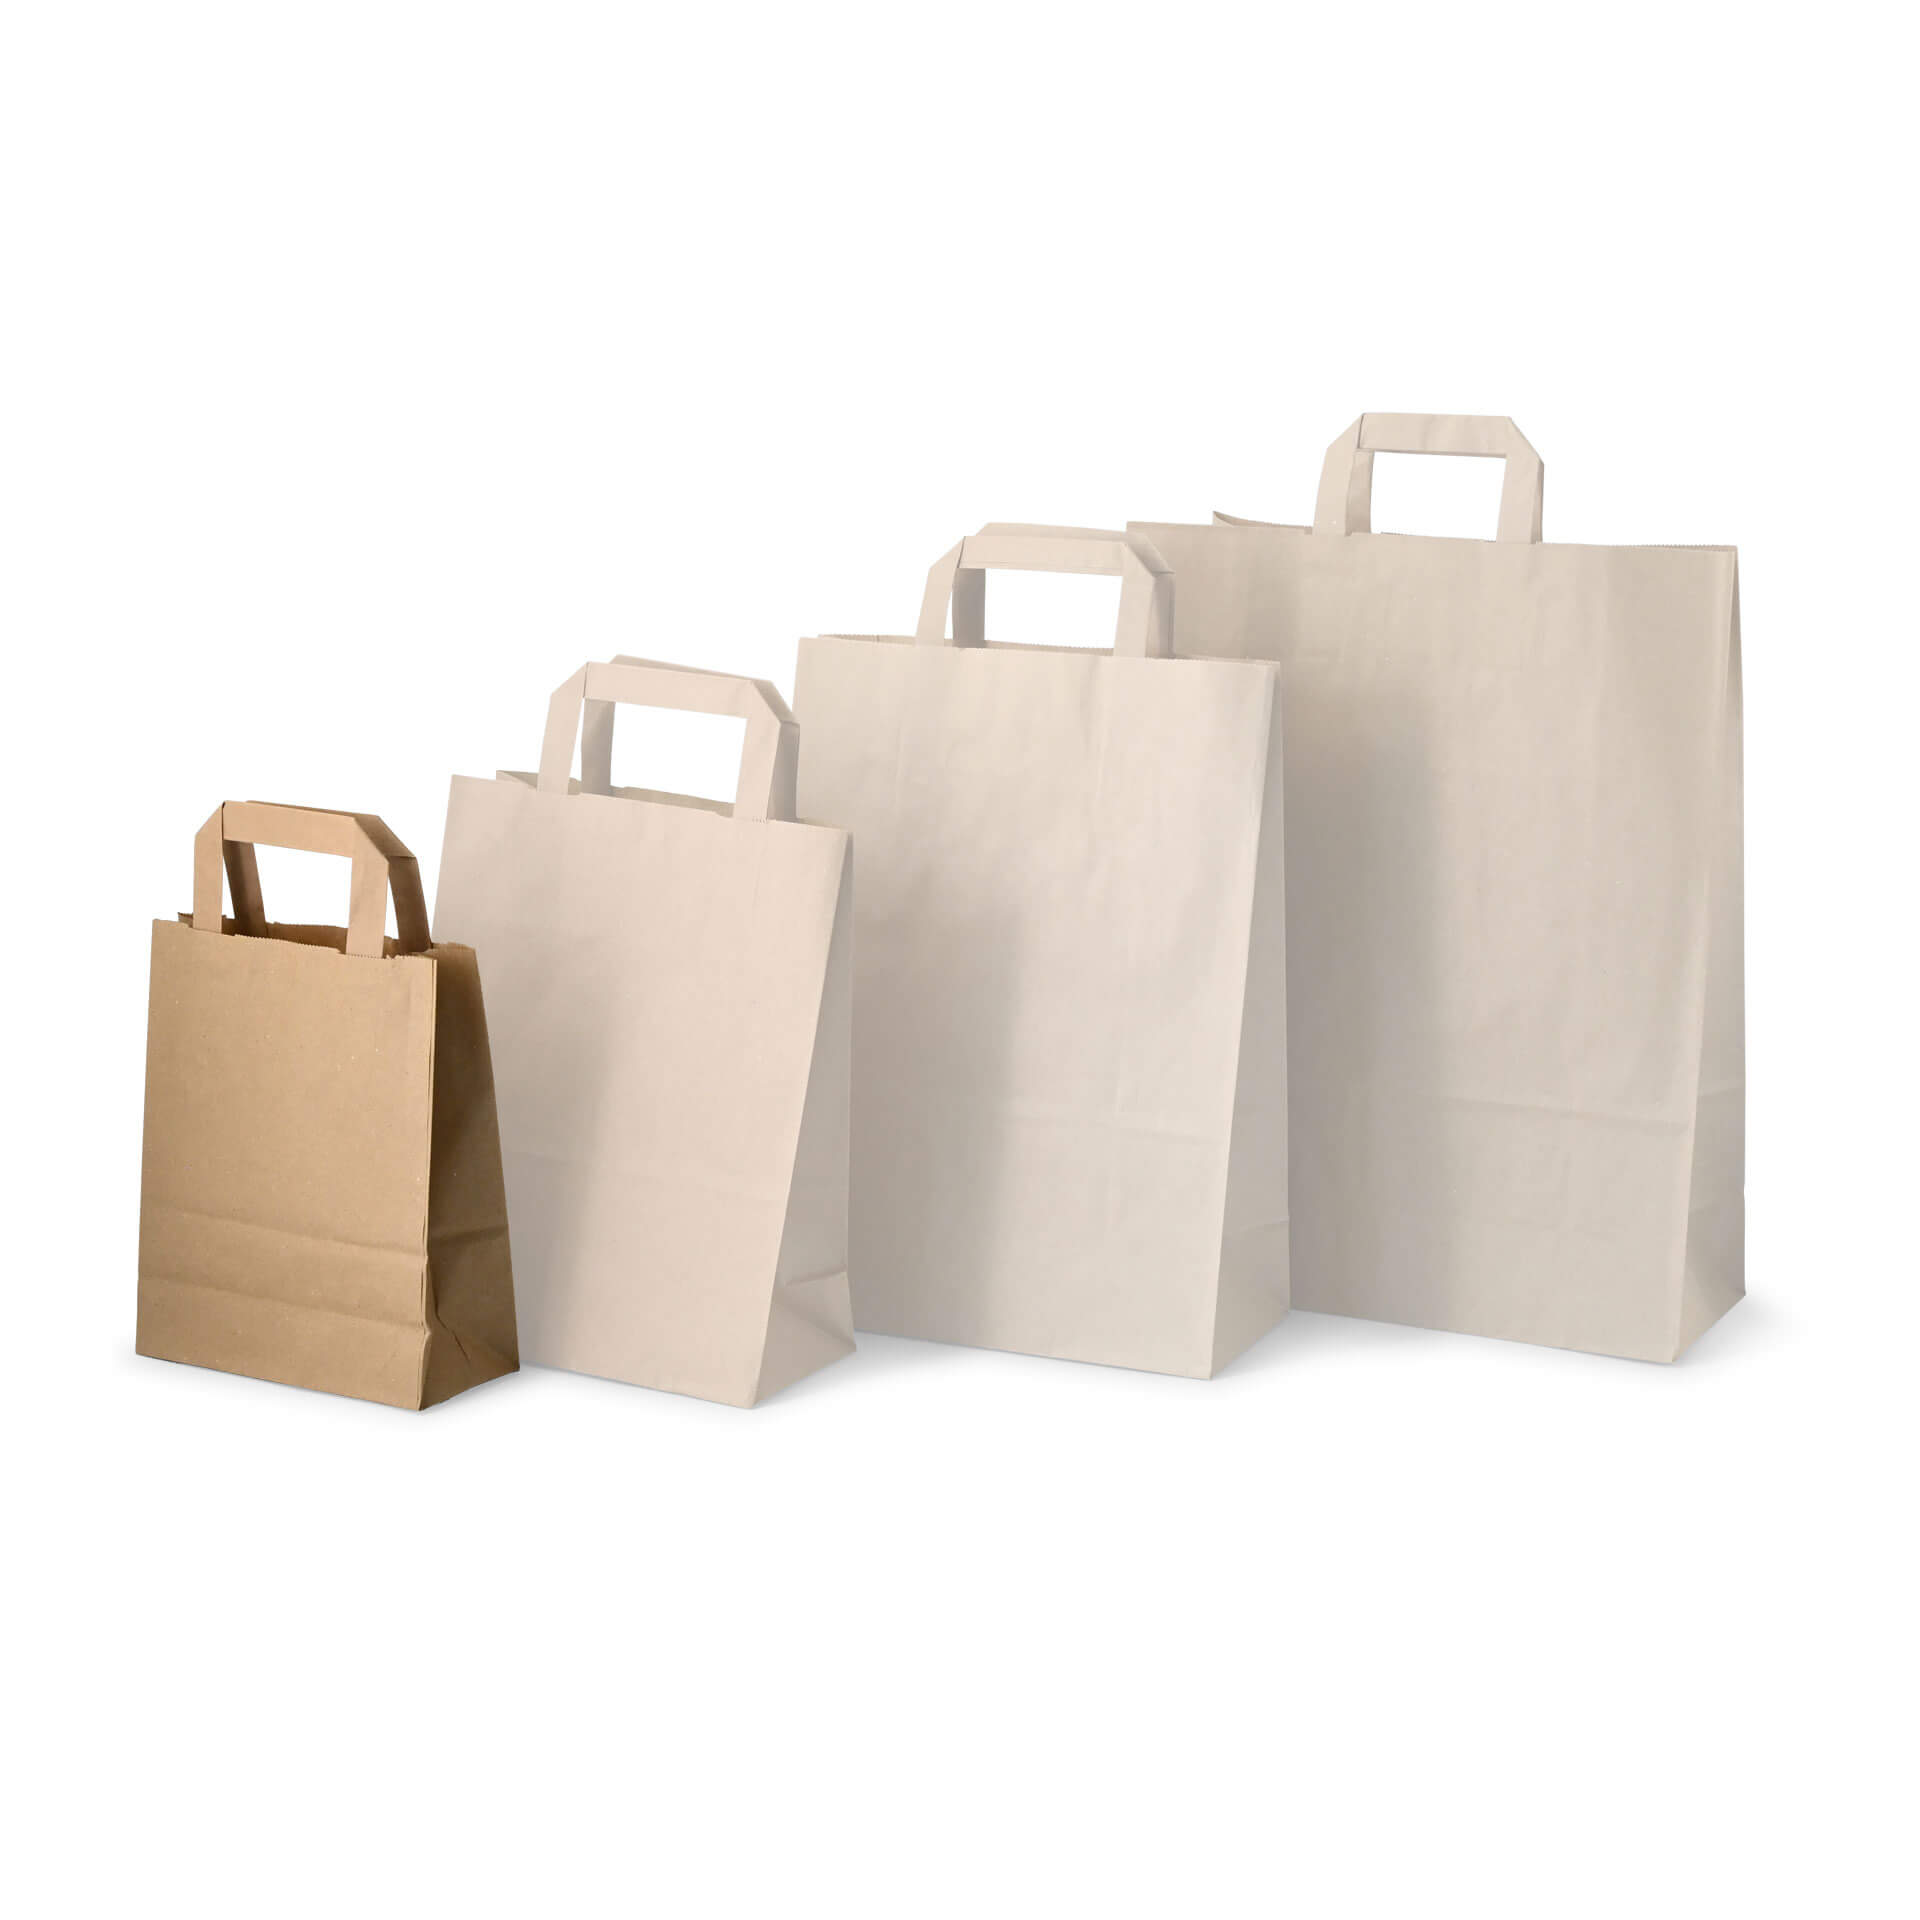 Recycling paper-carrier bags S, 18 x 8 x 22 cm, kraft